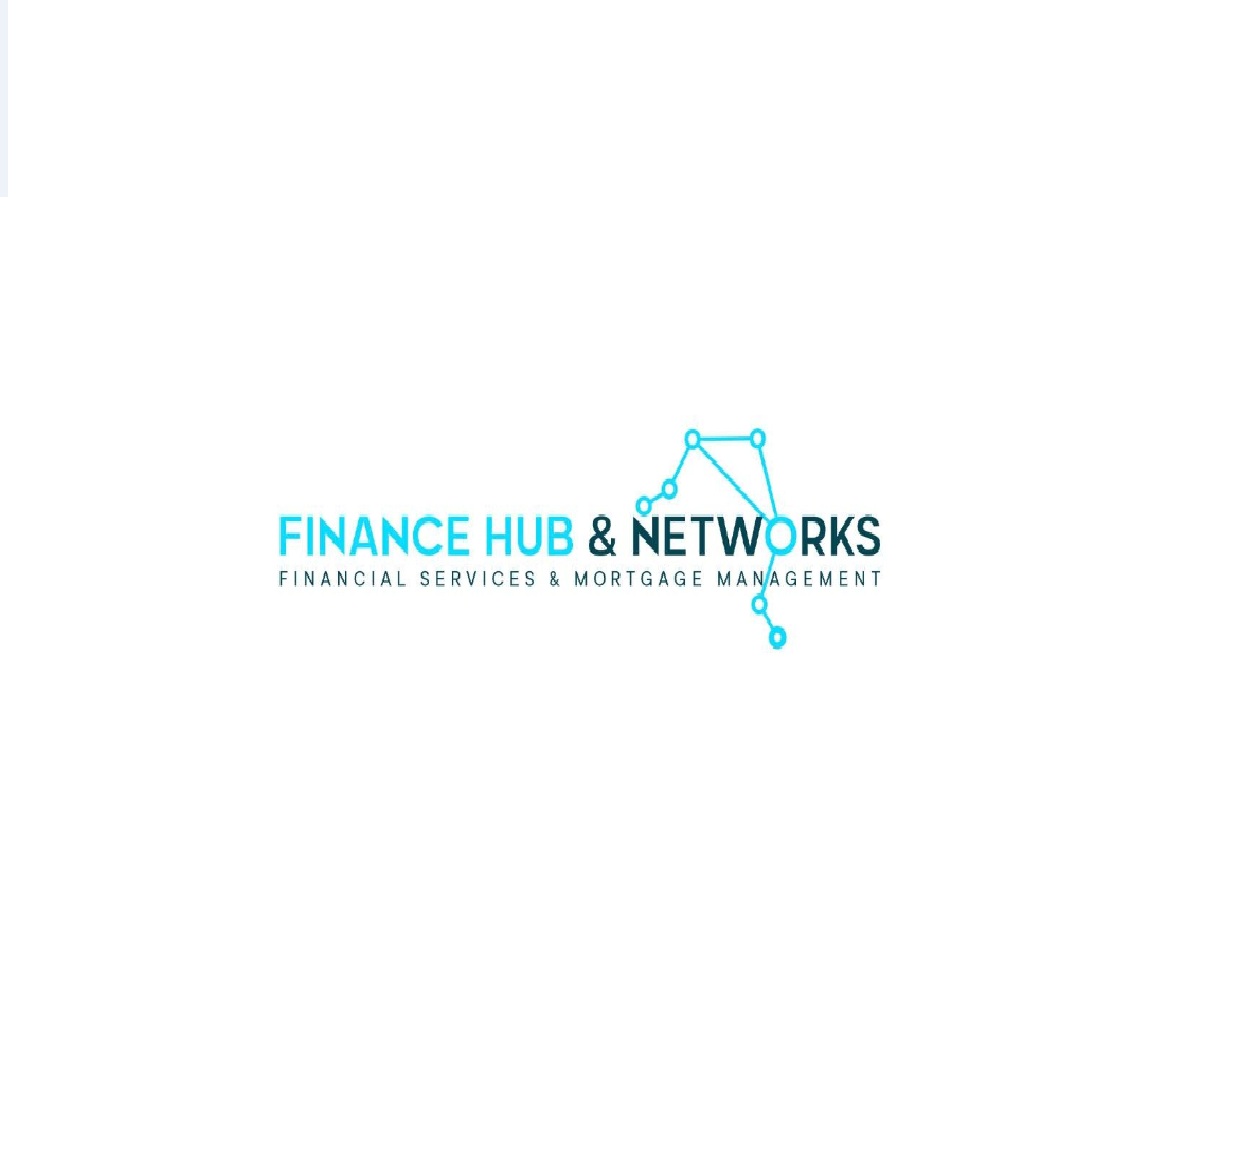 Finance Hub & Networks